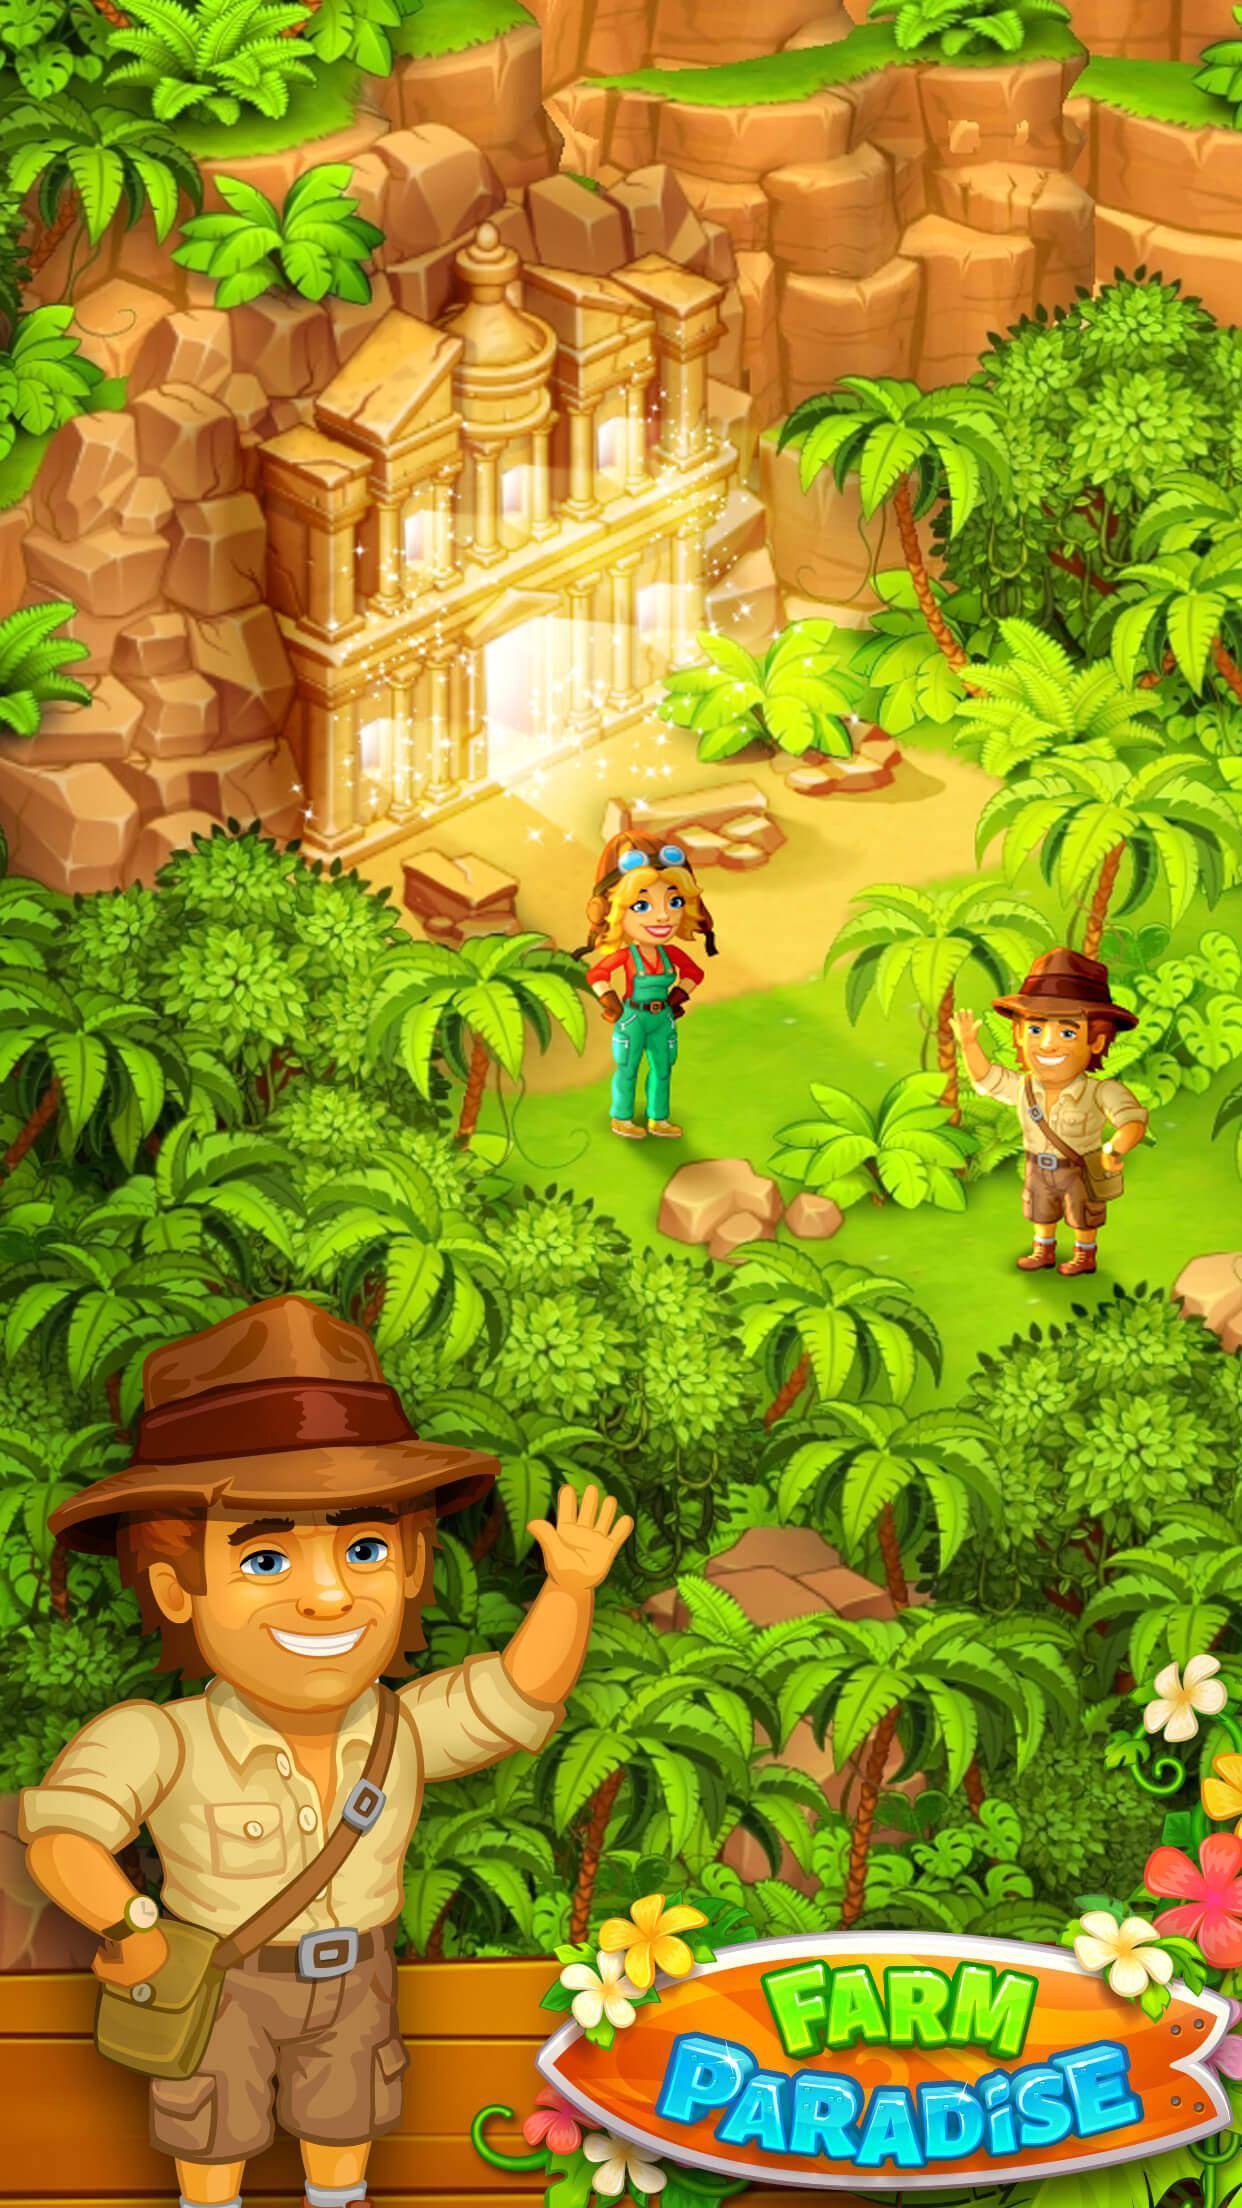 Farm Paradise Fun farm trade game at lost island 2.17 Screenshot 21